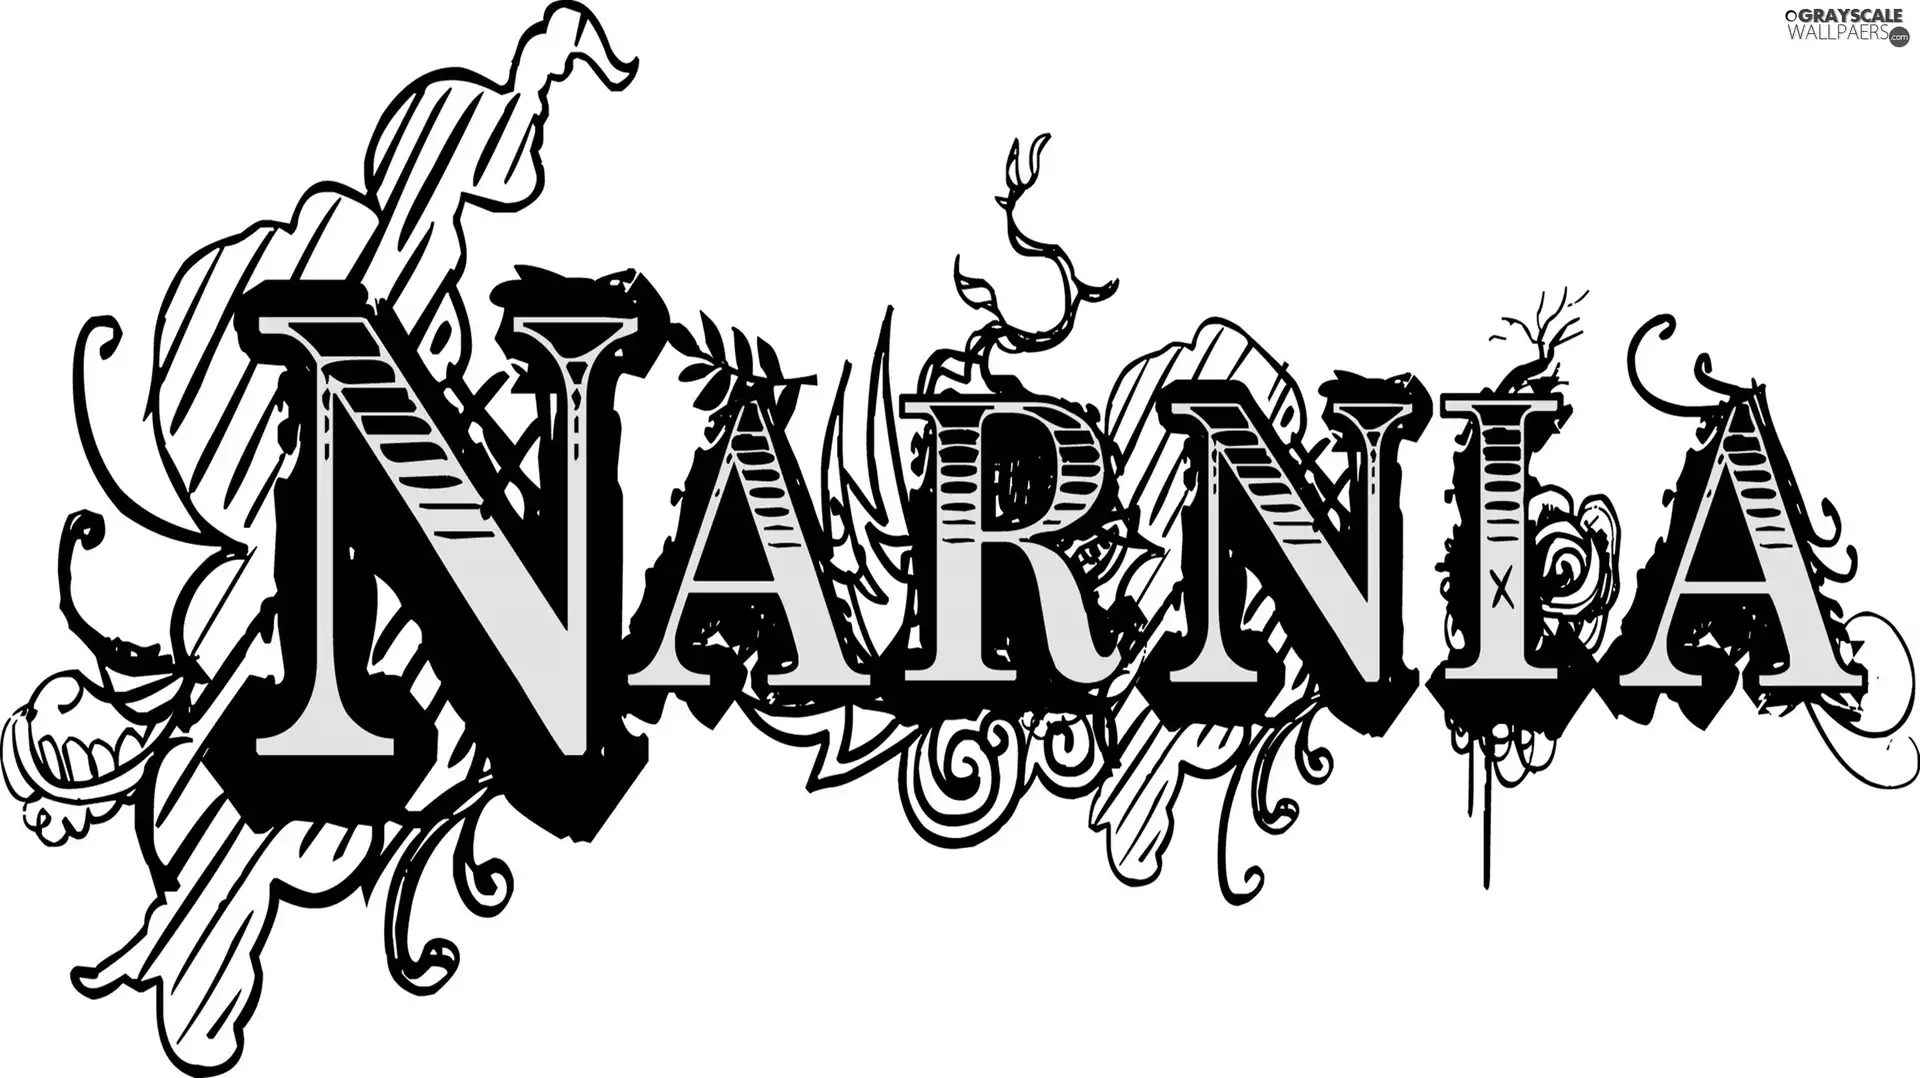 graphics, 2D, Narnia, text